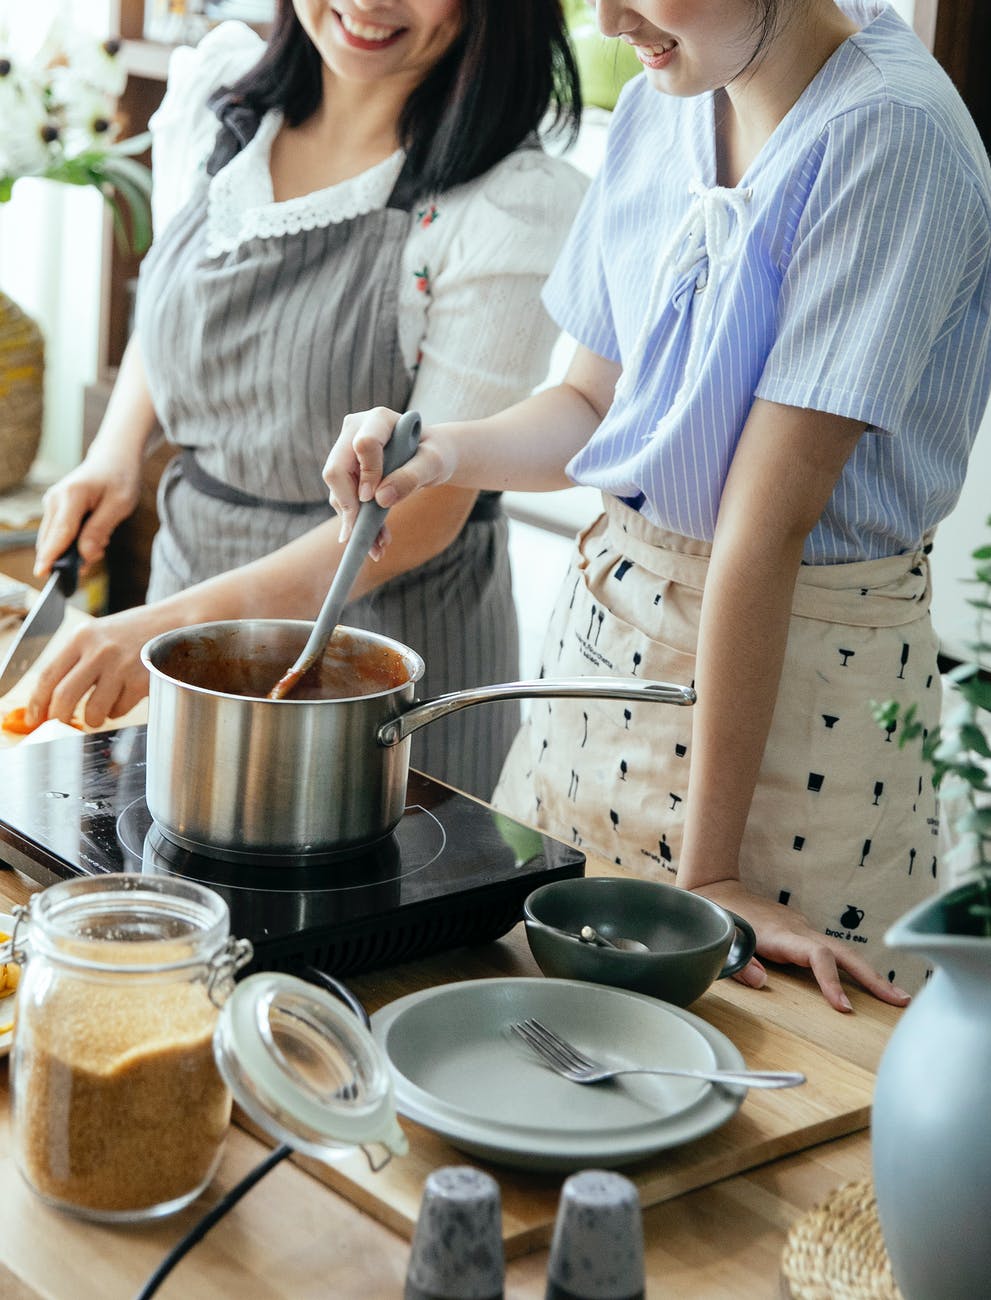 crop women cooking together in kitchen